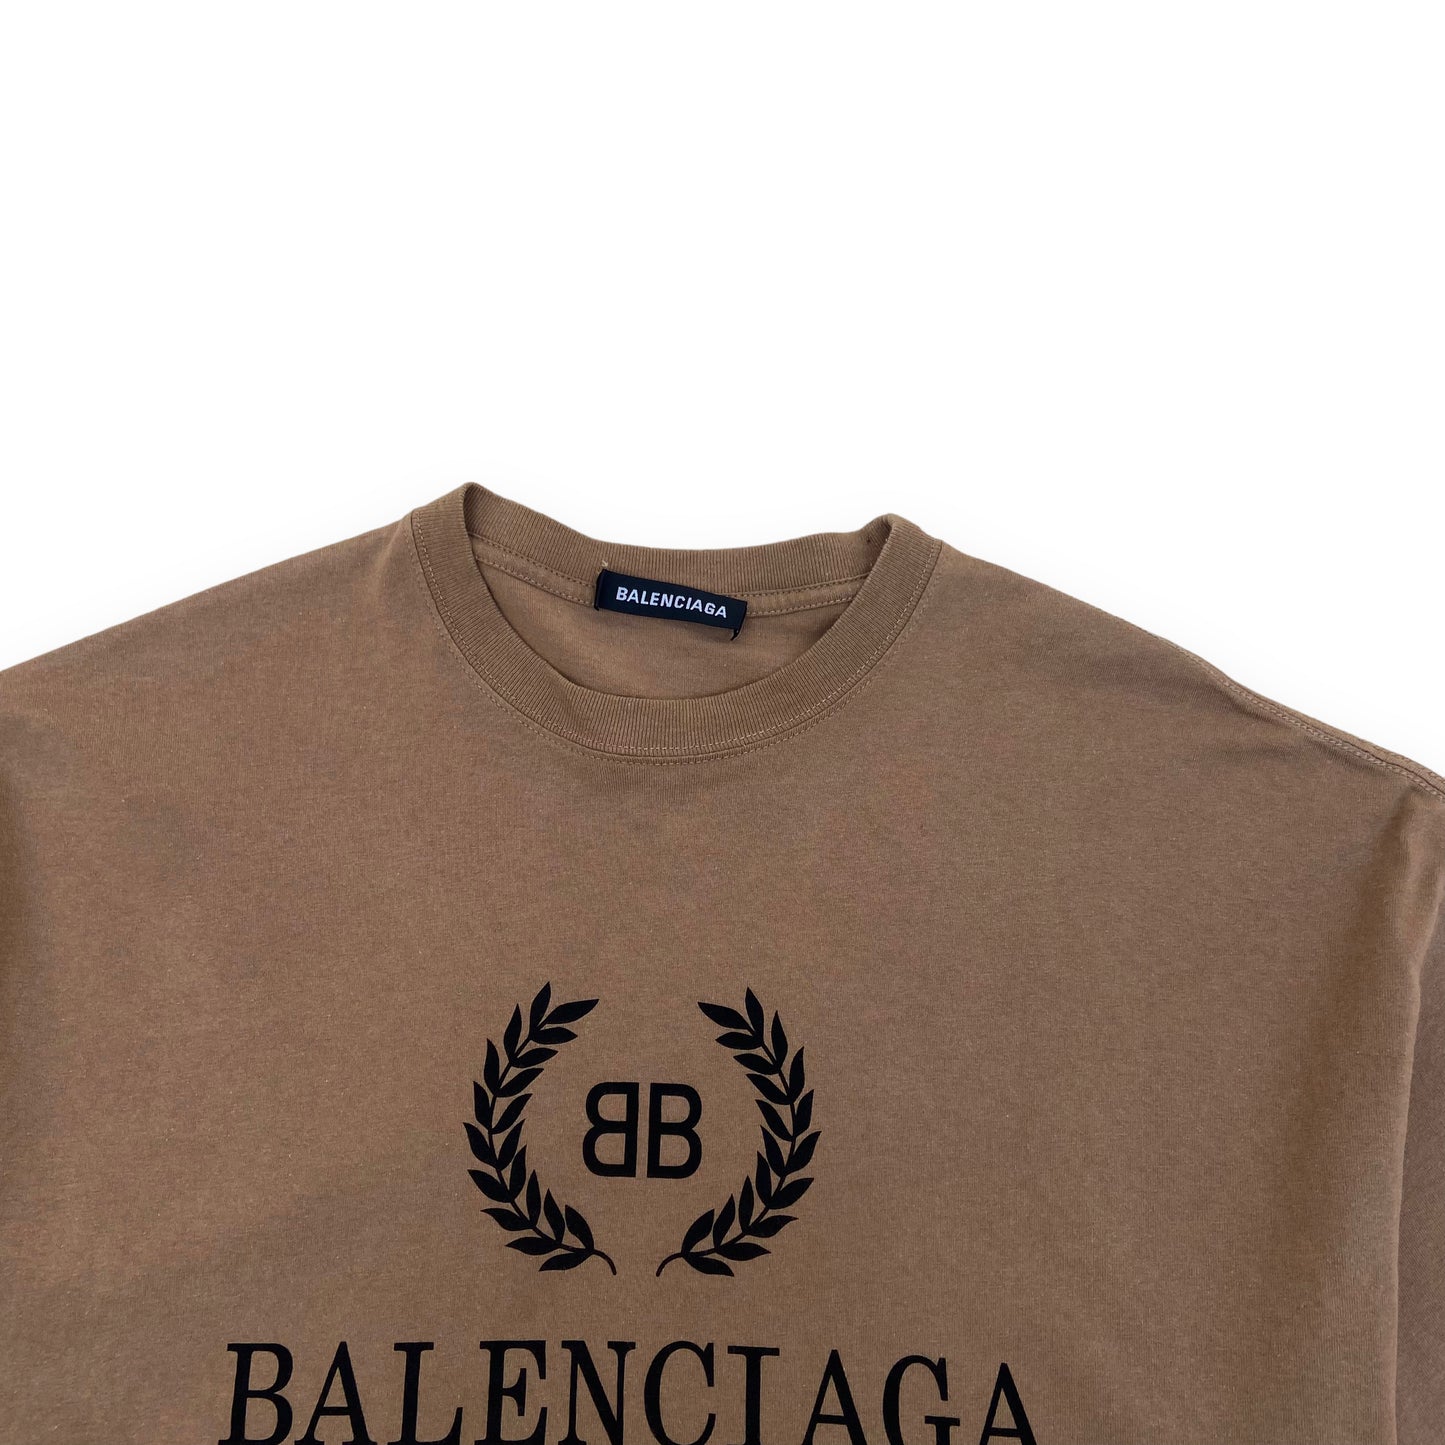 BALENCIAGA OVERSIZED BB T-SHIRT BEIGE XS